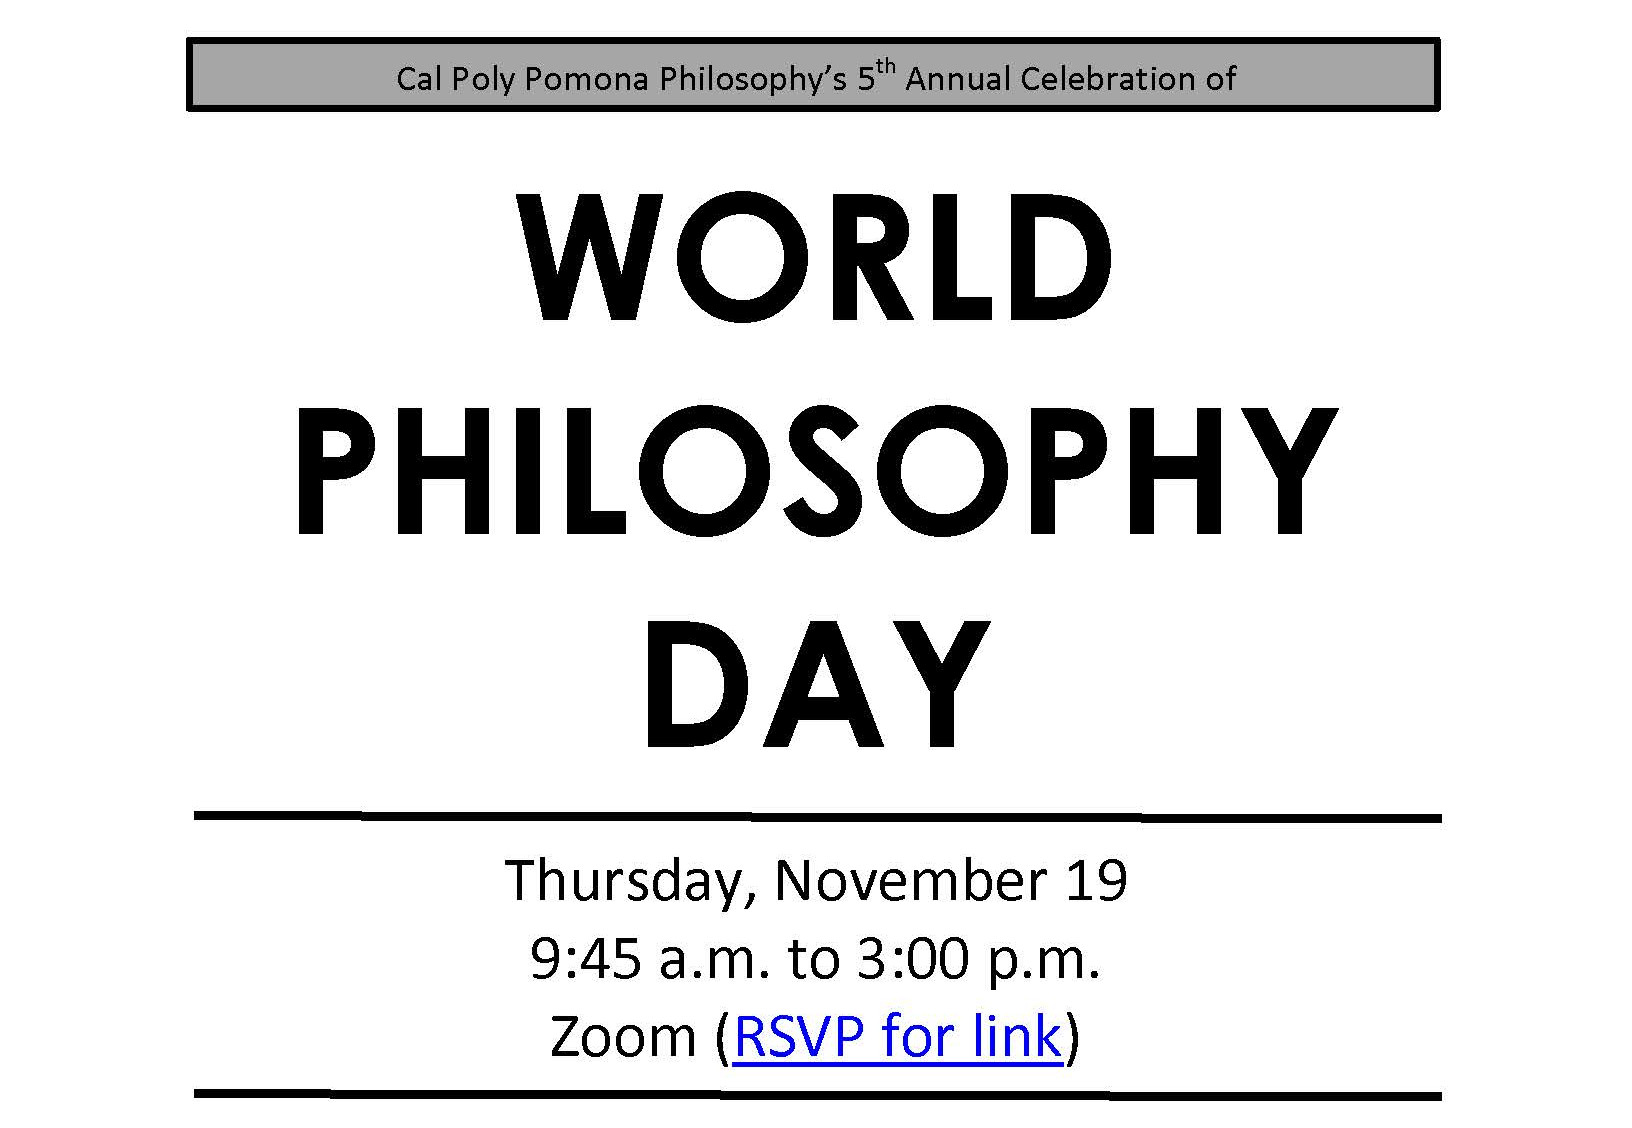 World Philosophy Day.  Thursday, November 19.  9:45am to 3:00pm.  Zoom(RSVP for link)